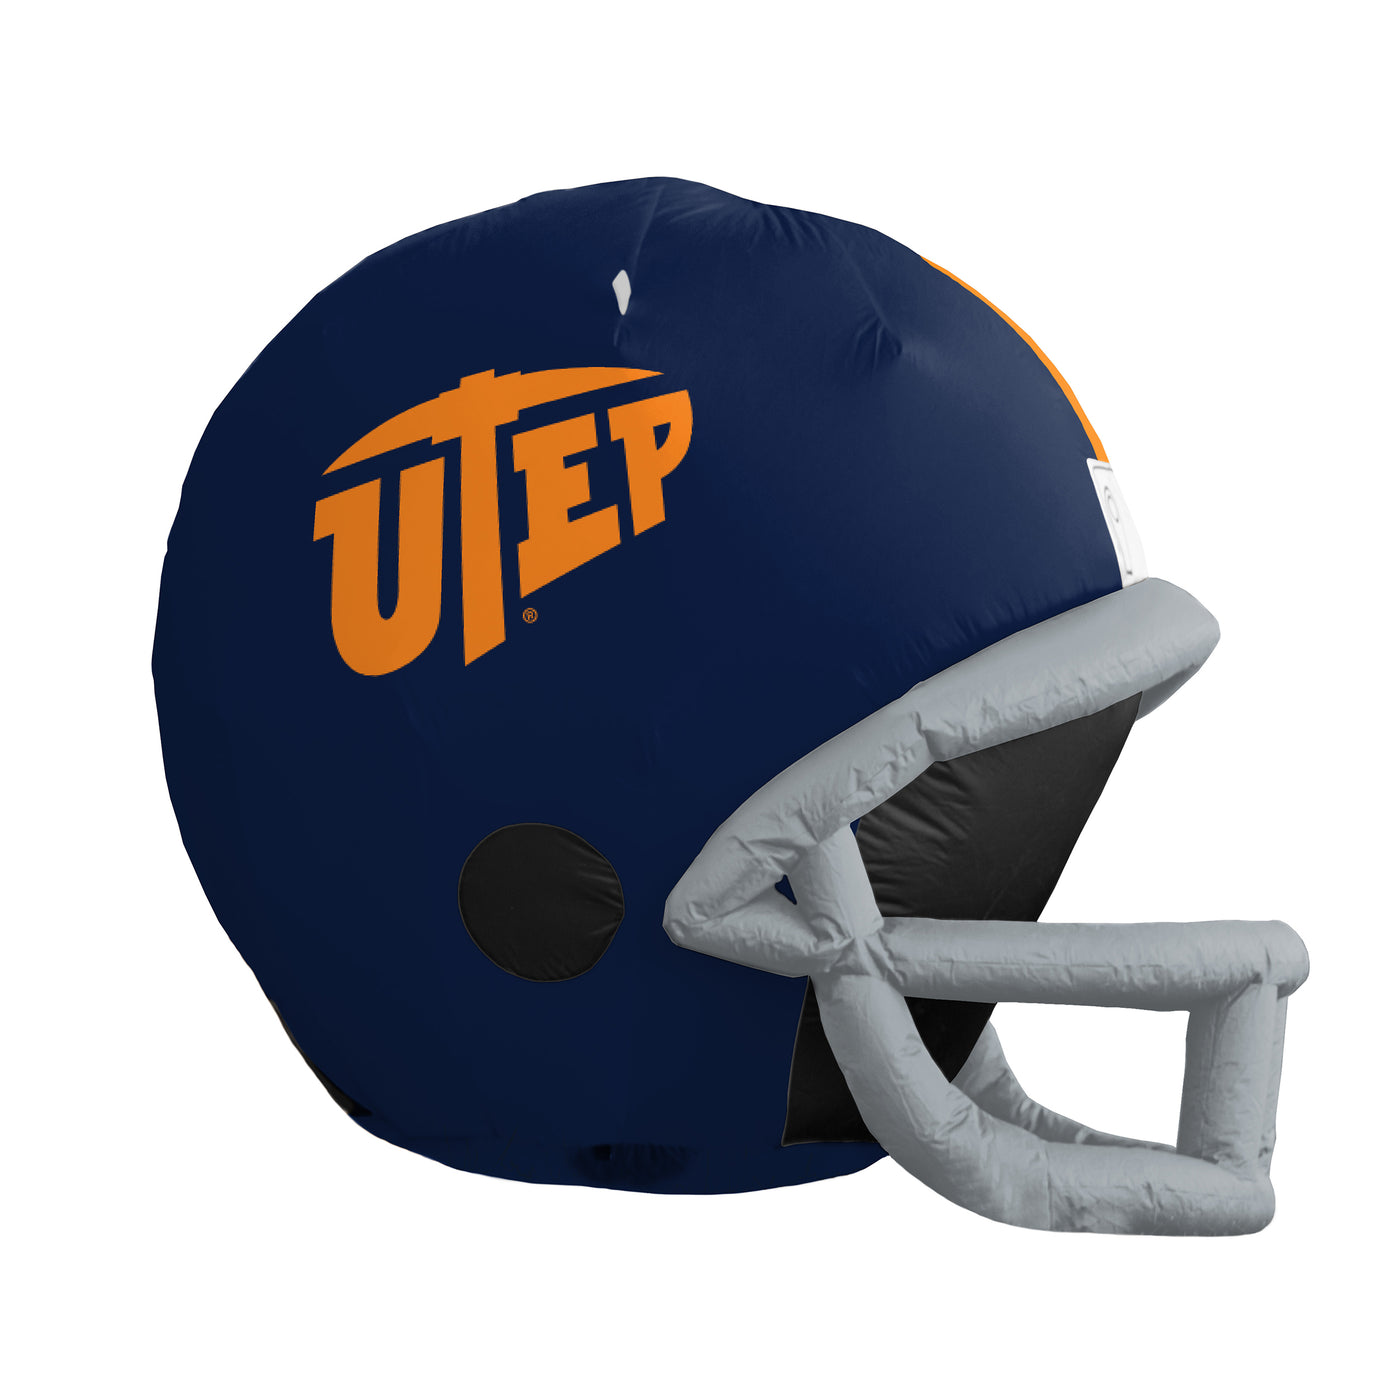 UTEP 4ft Yard Inflatable Helmet